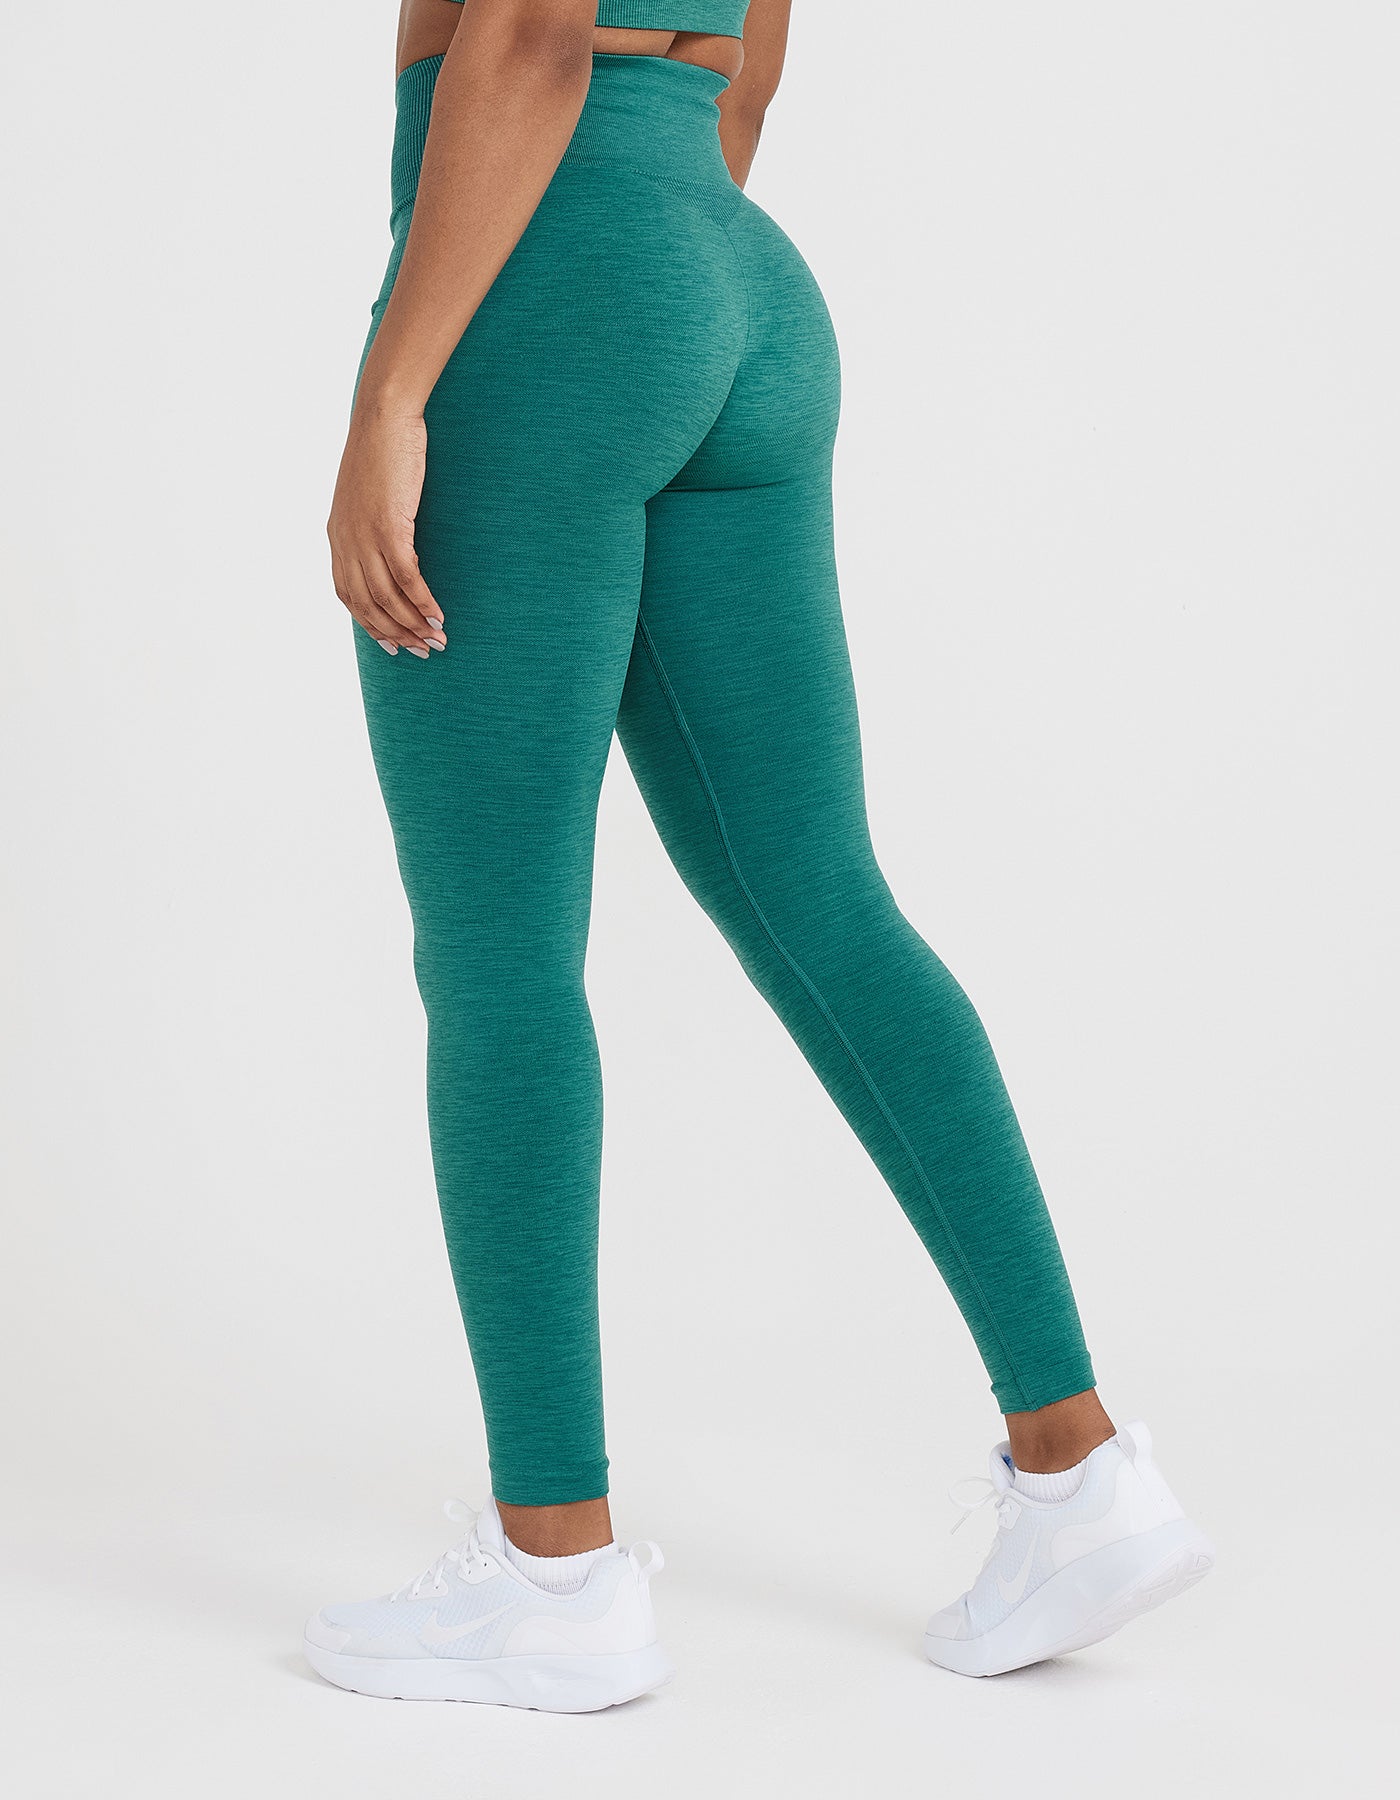 Comfy Seamless Women Leggings & Yoga Pants Green